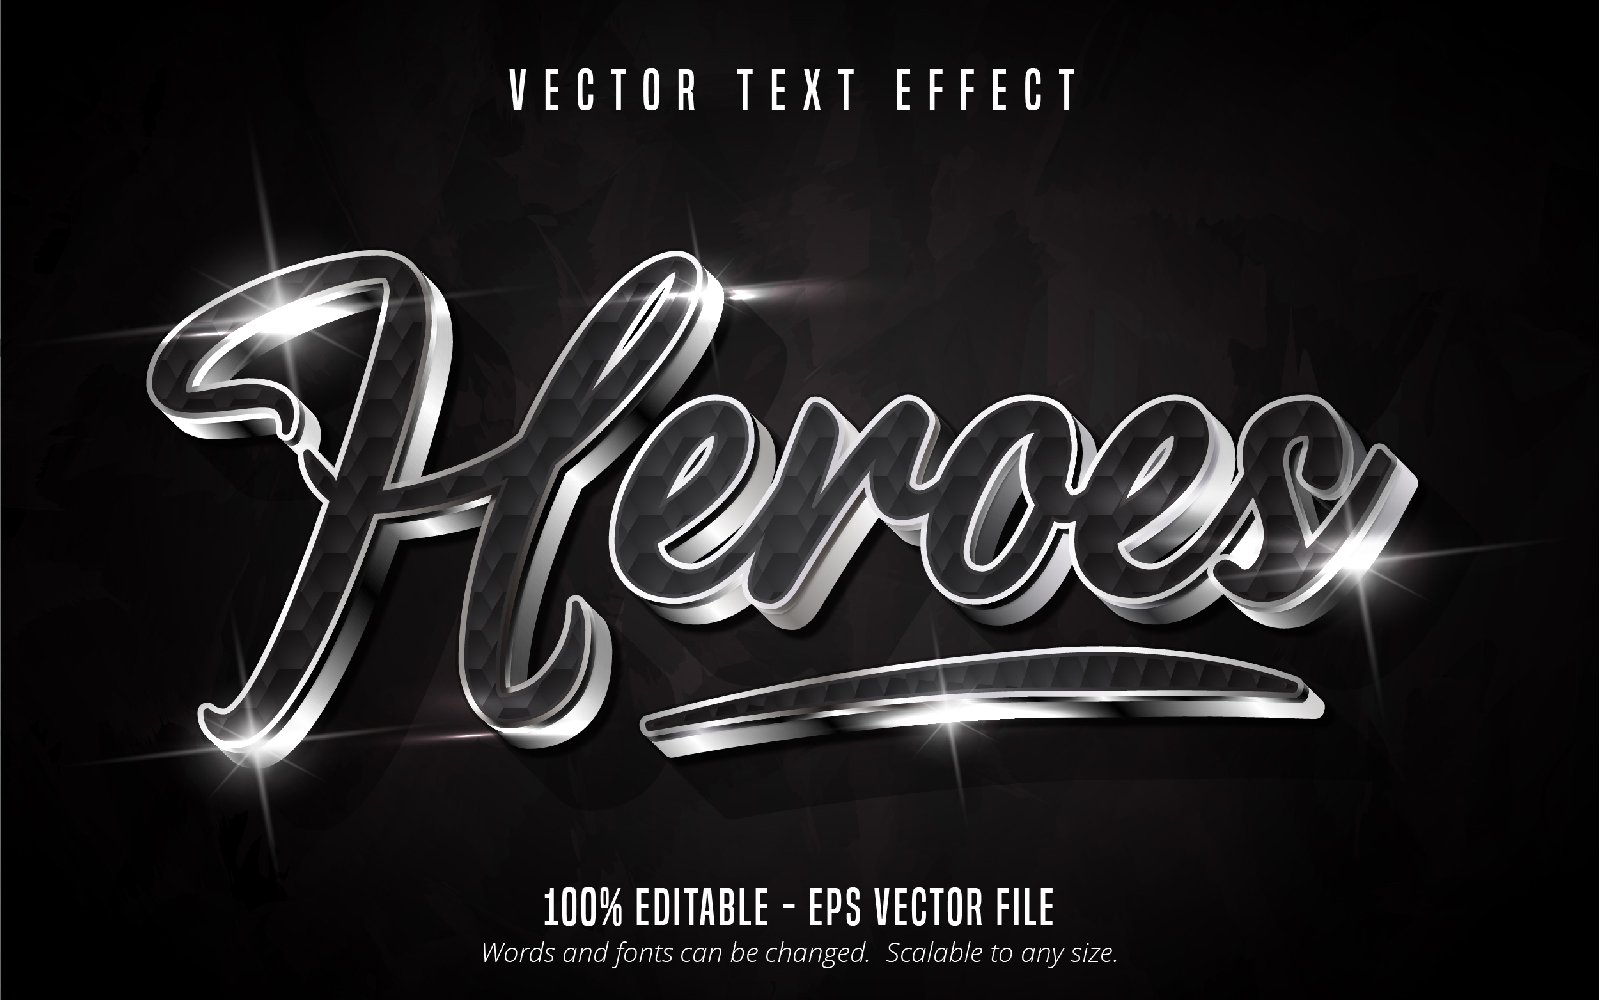 Template #221444 Hero Silver Webdesign Template - Logo template Preview